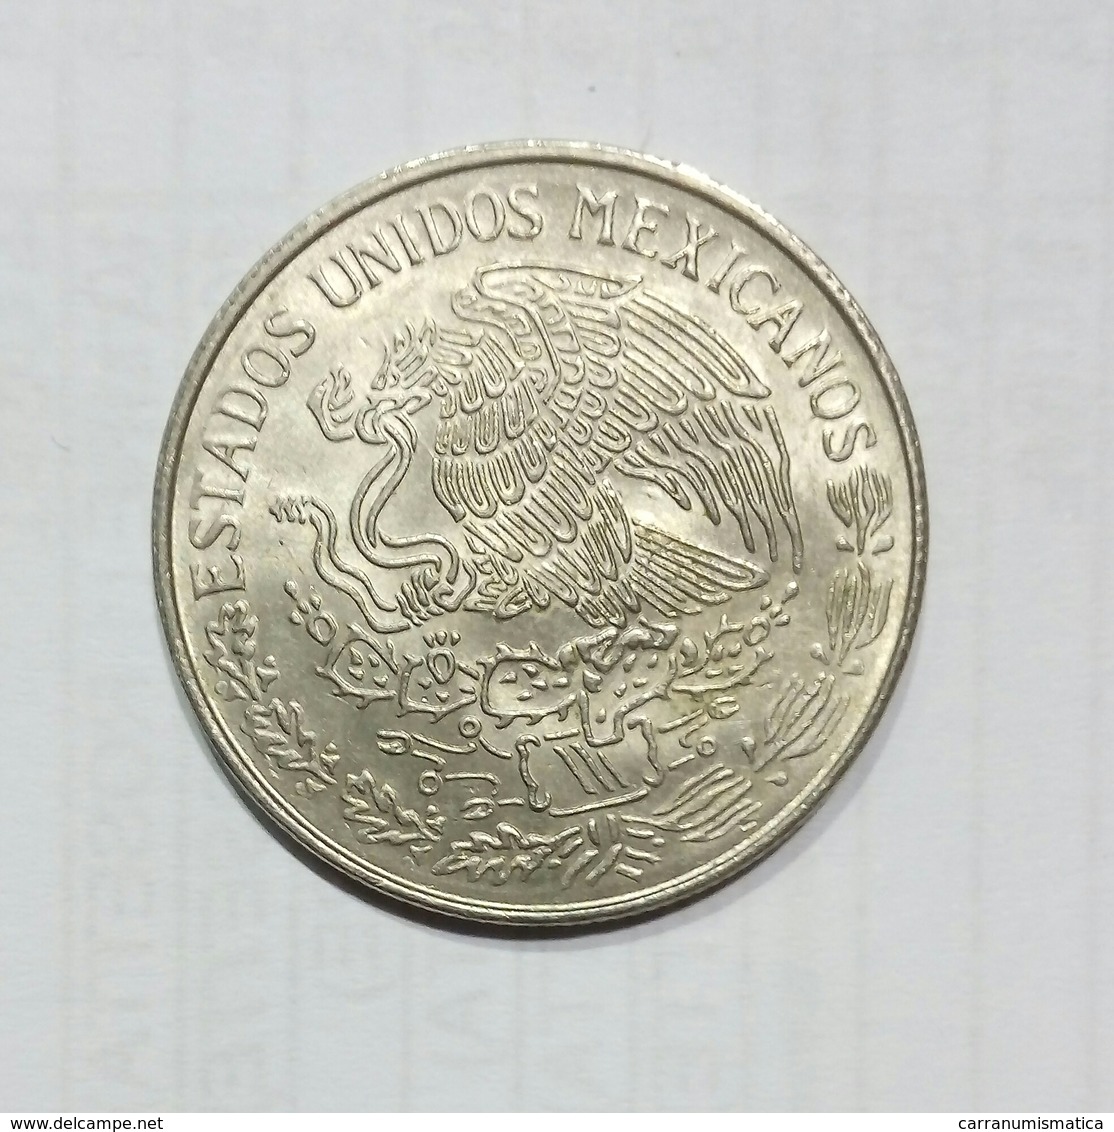 Messico / Mexico - 1 Peso (1971) - Messico